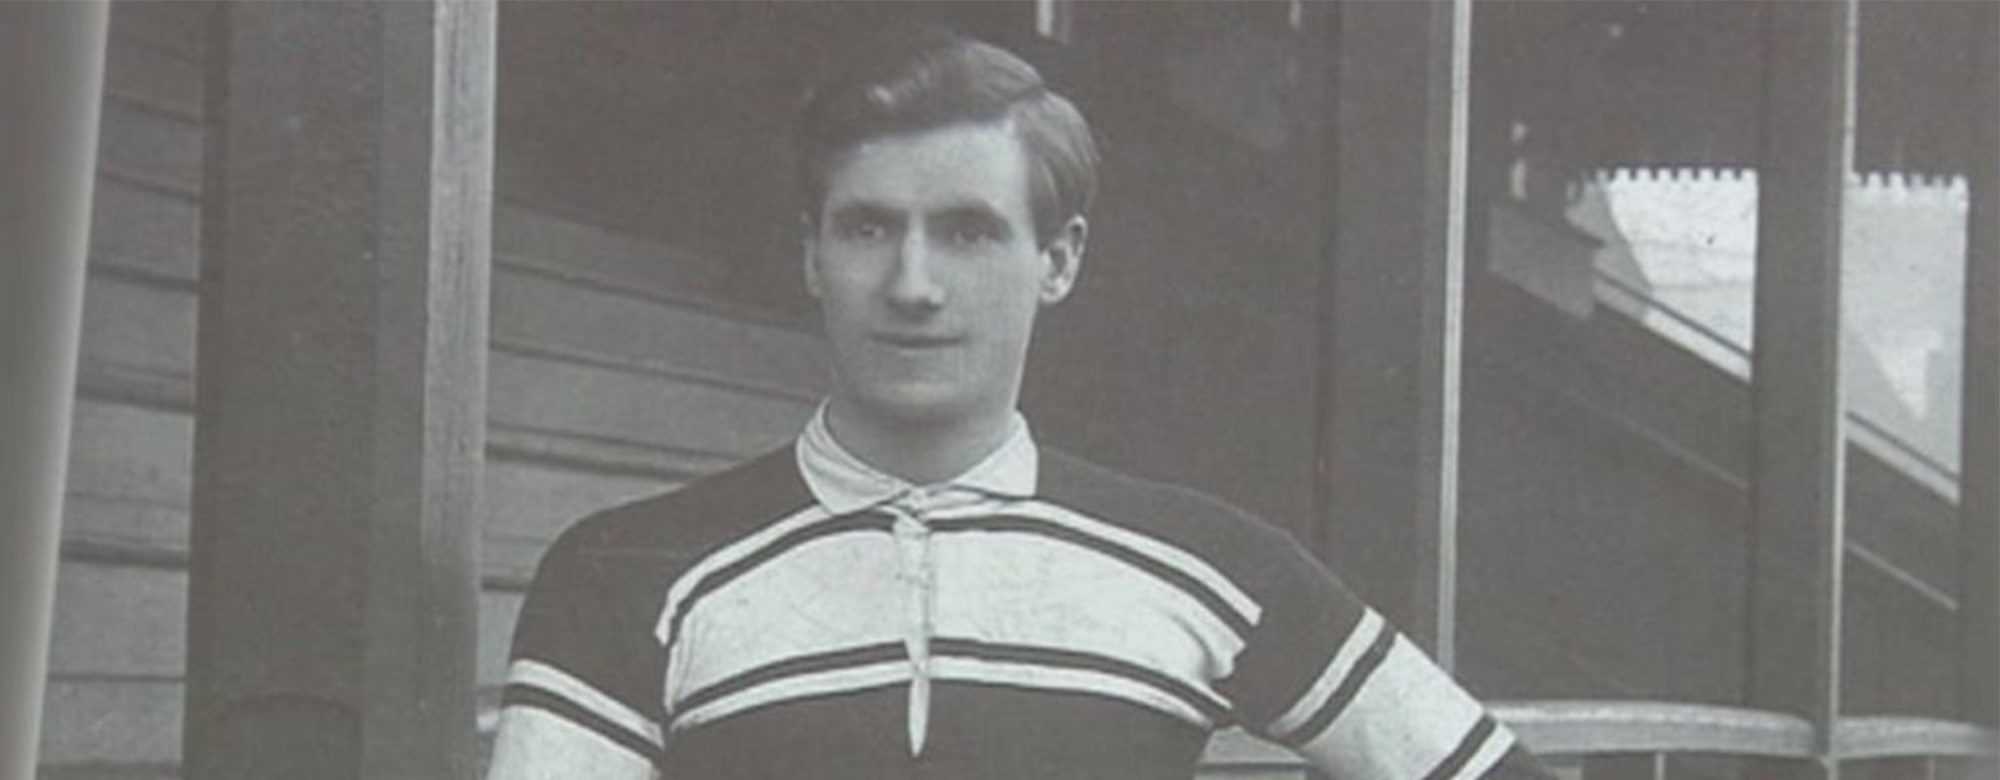 Rugby League Icons: Jack Harrison VC MC